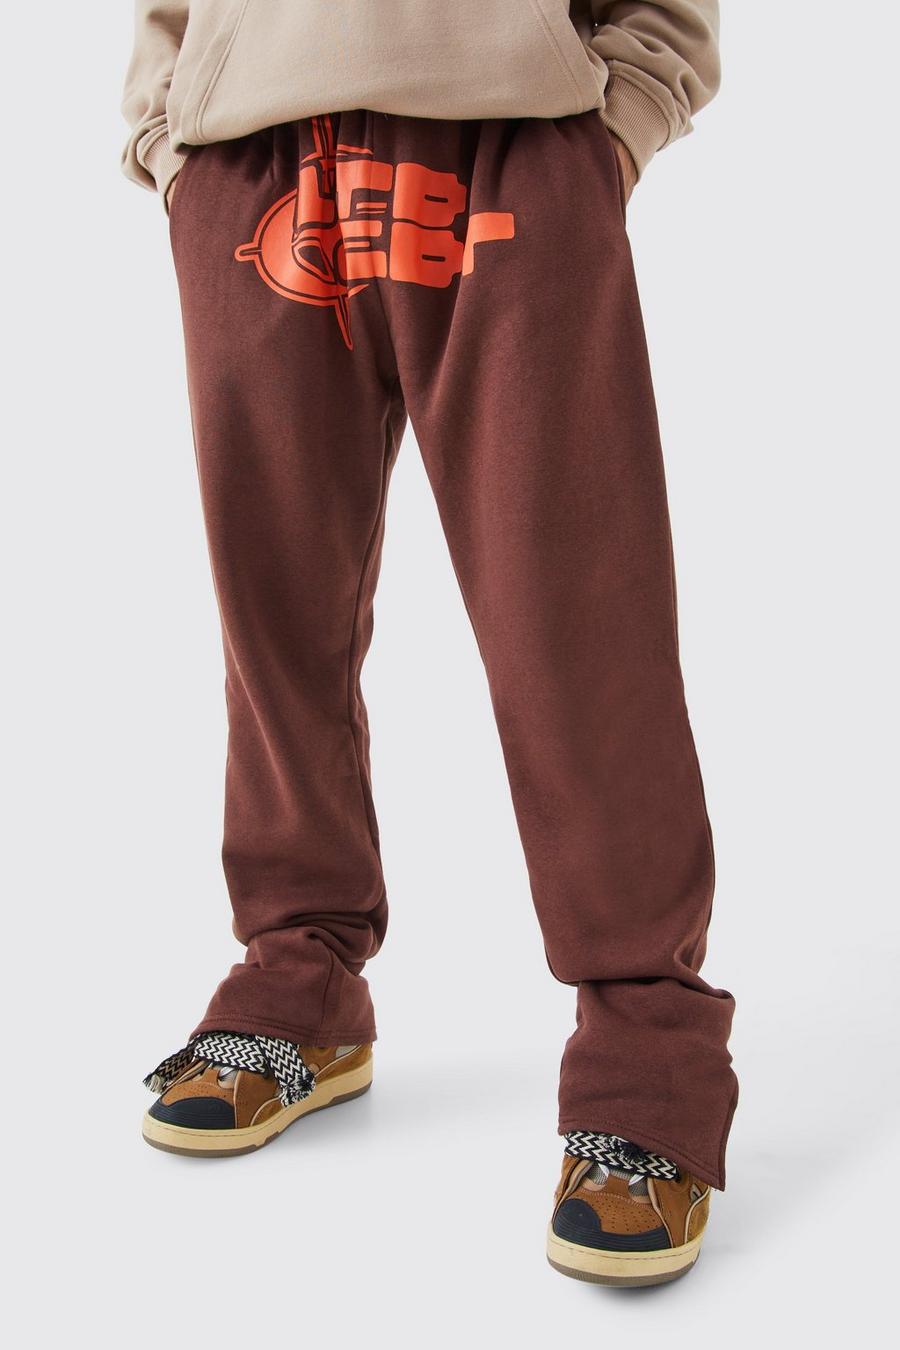 Pantaloni tuta con grafica Target e spacco sul fondo, Chocolate image number 1